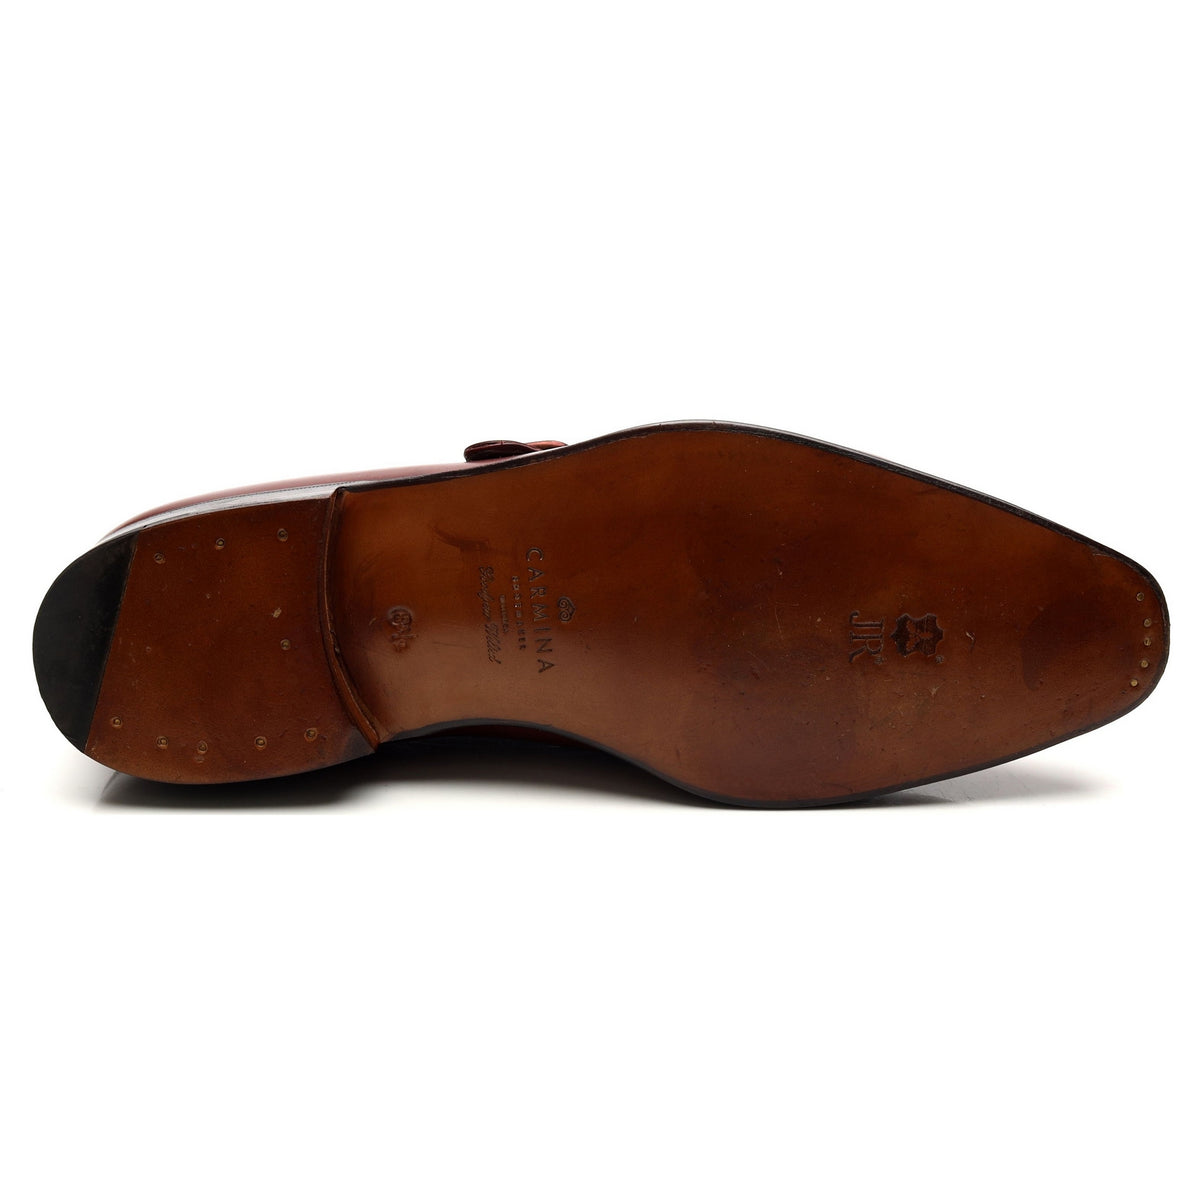 &#39;80180&#39; Red Cordovan Leather Split Toe Monk Strap UK 8.5 EE